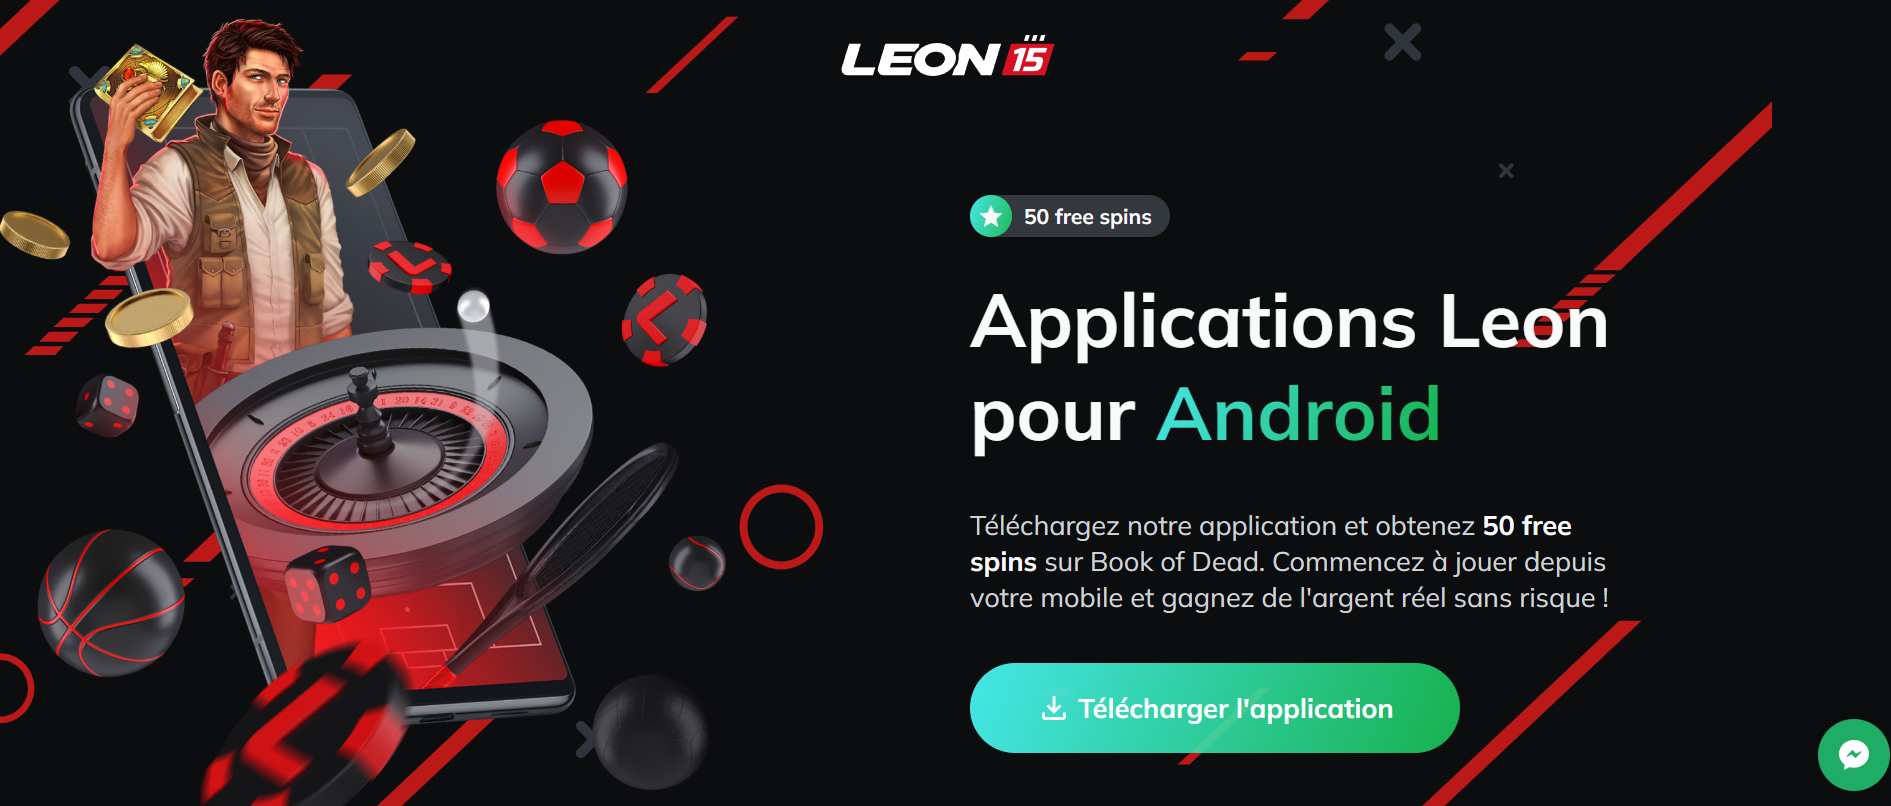 Leon bet app